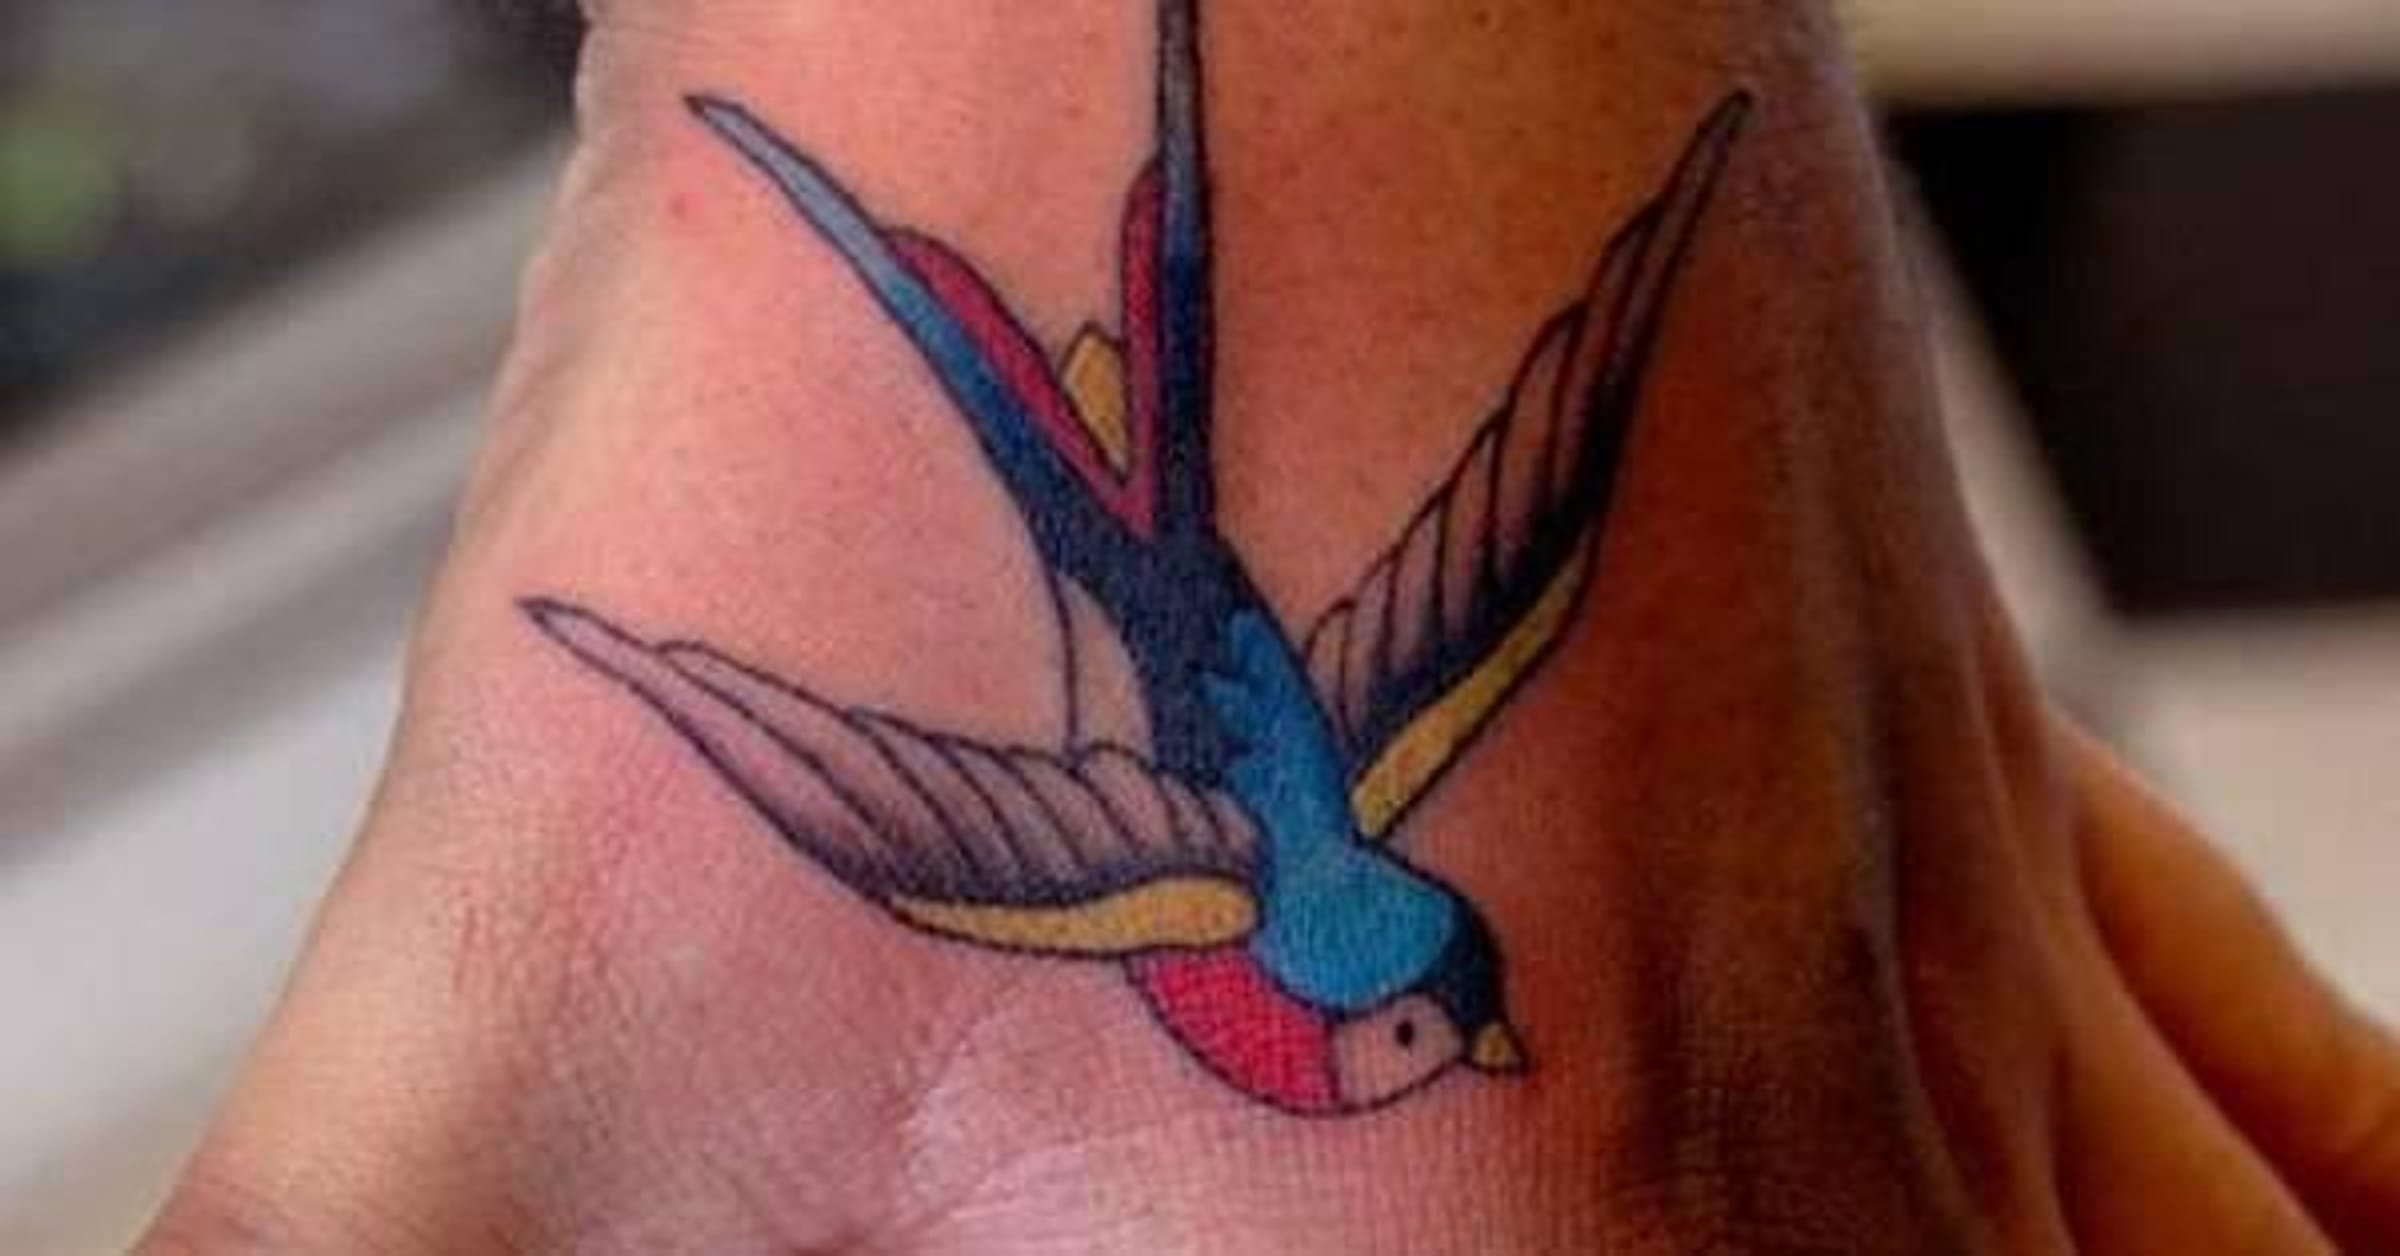 sailor blue bird tattoo